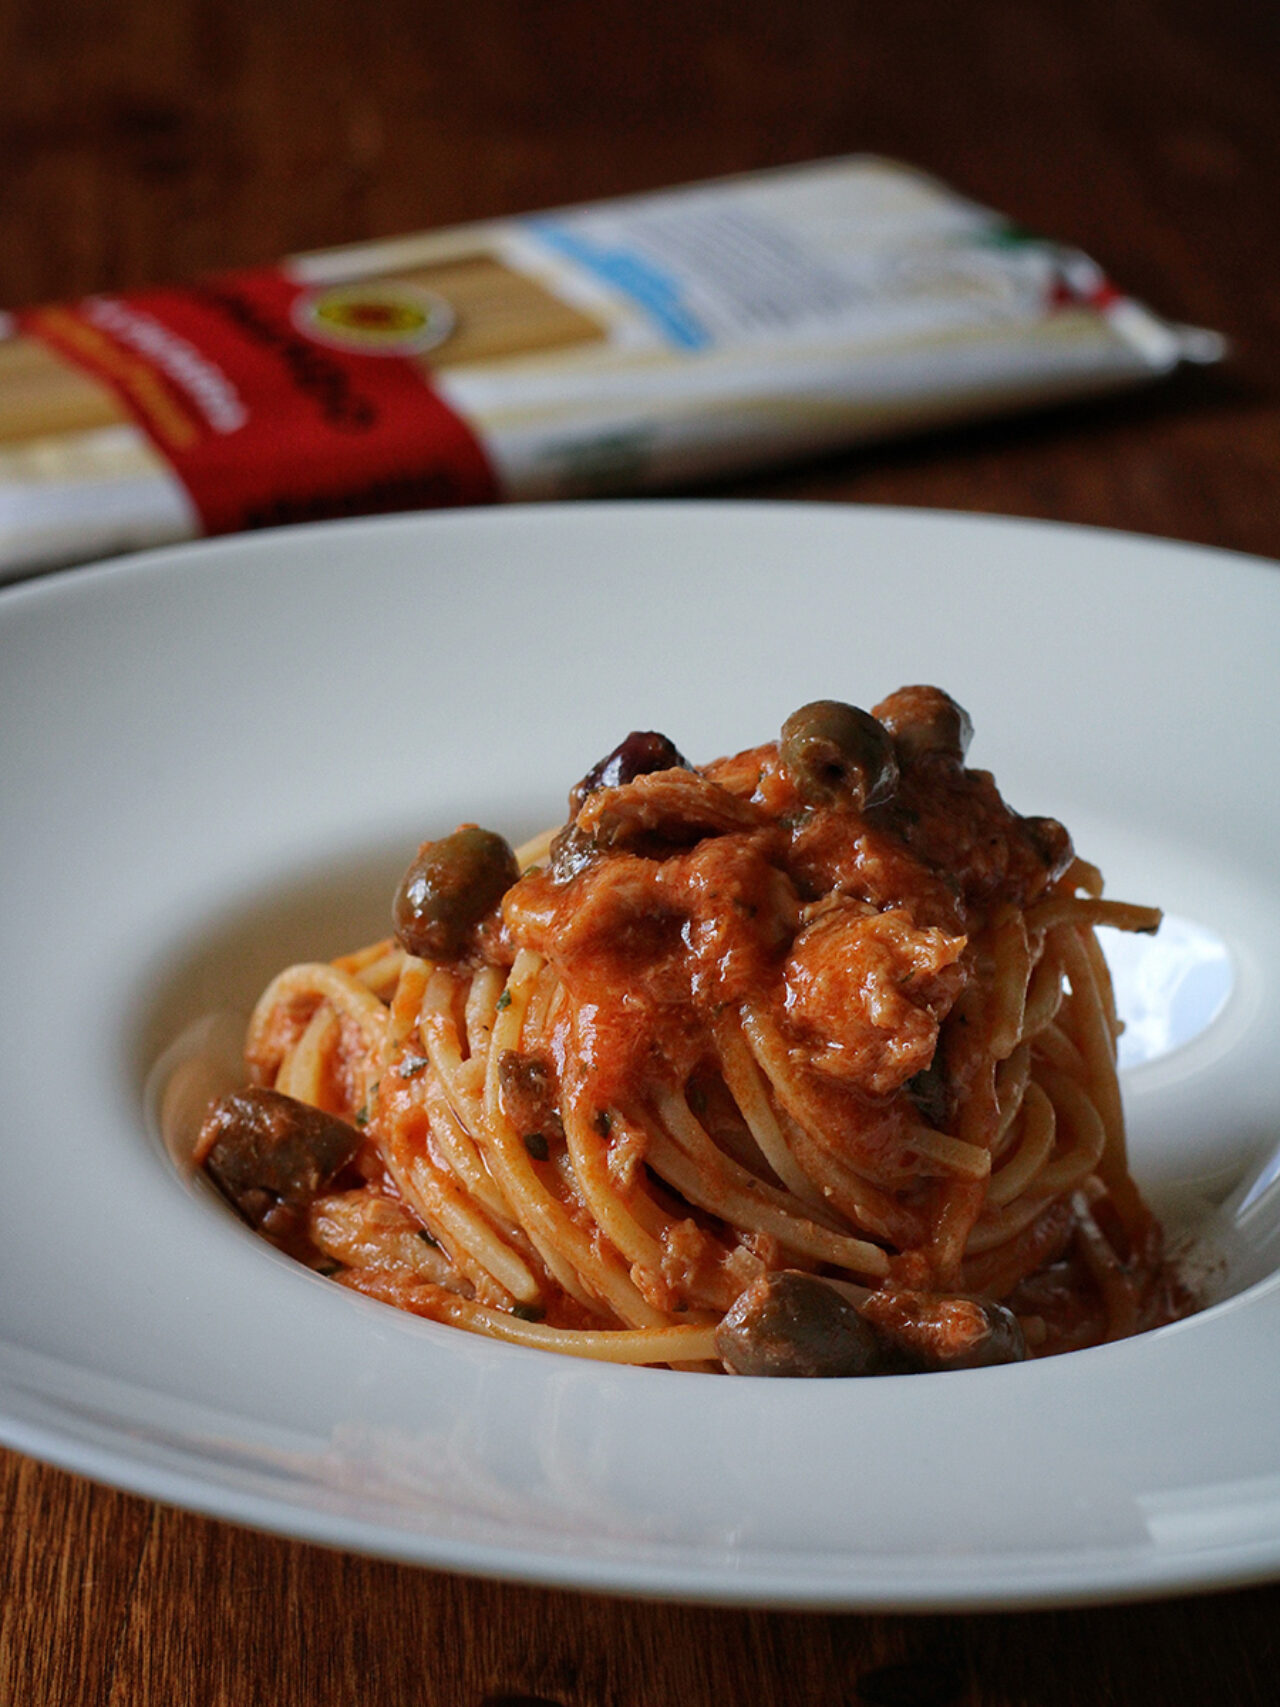 Spaghetti al tonno "svuota-dispensa"